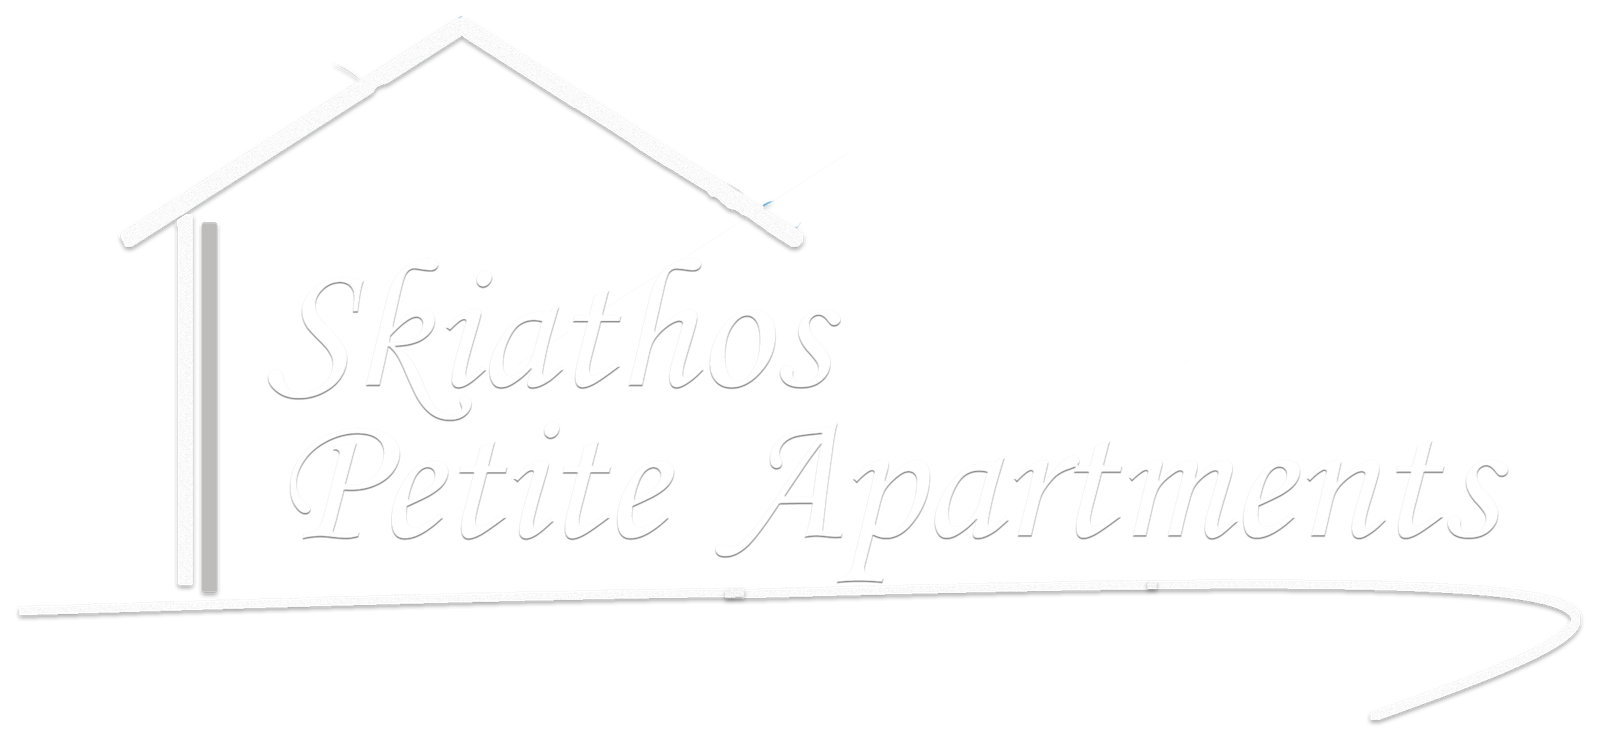 Skiathos Petite Apartments | Smart Offers - Skiathos Petite Apartments